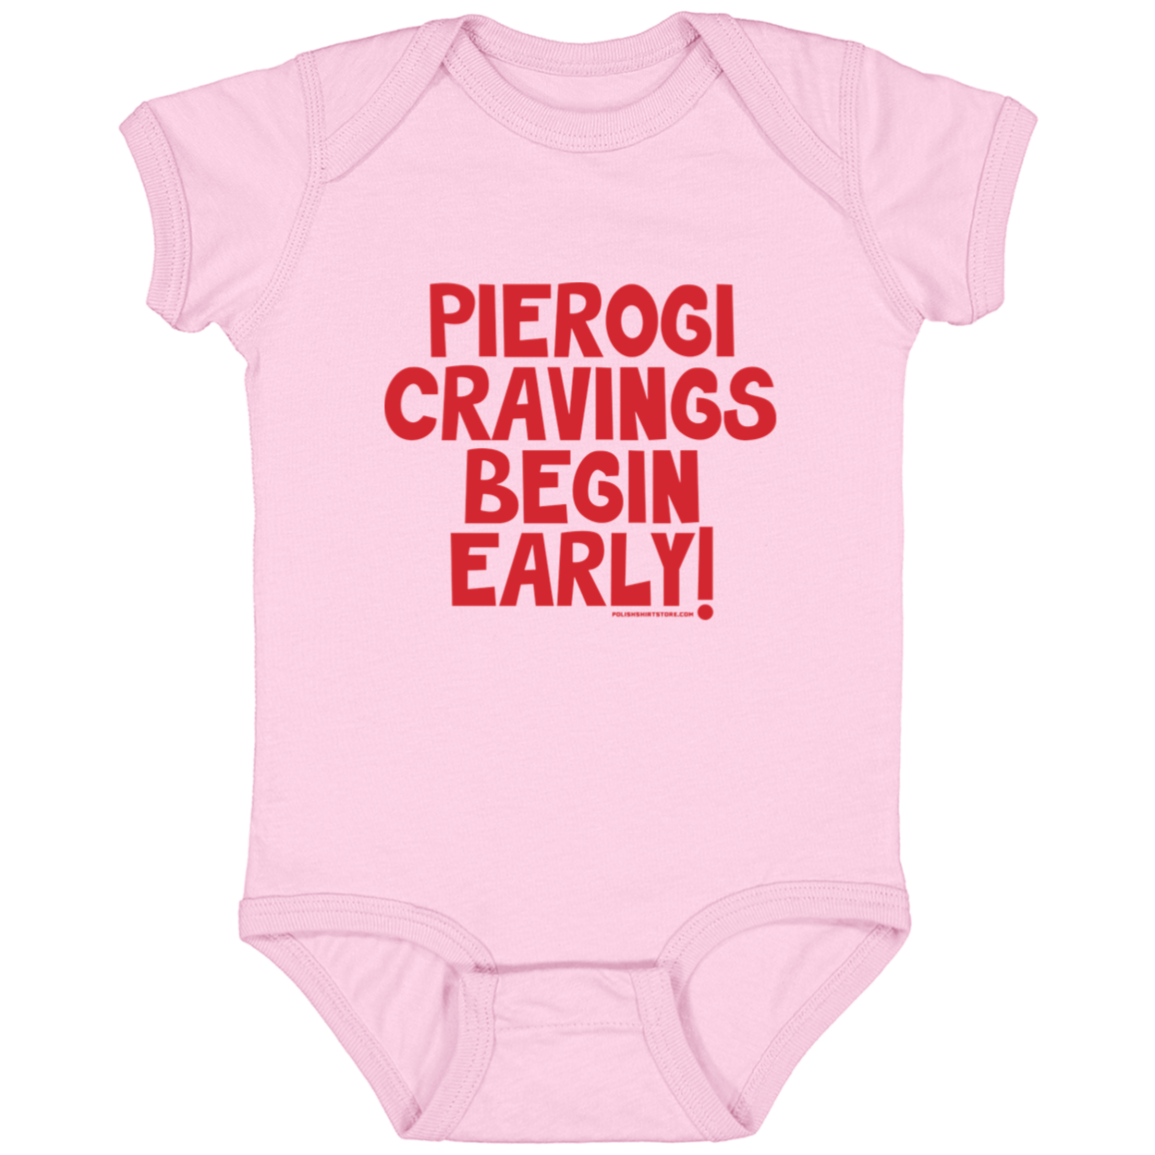 Pierogi Cravings Begin Early Infant Bodysuit Baby CustomCat Pink Newborn 